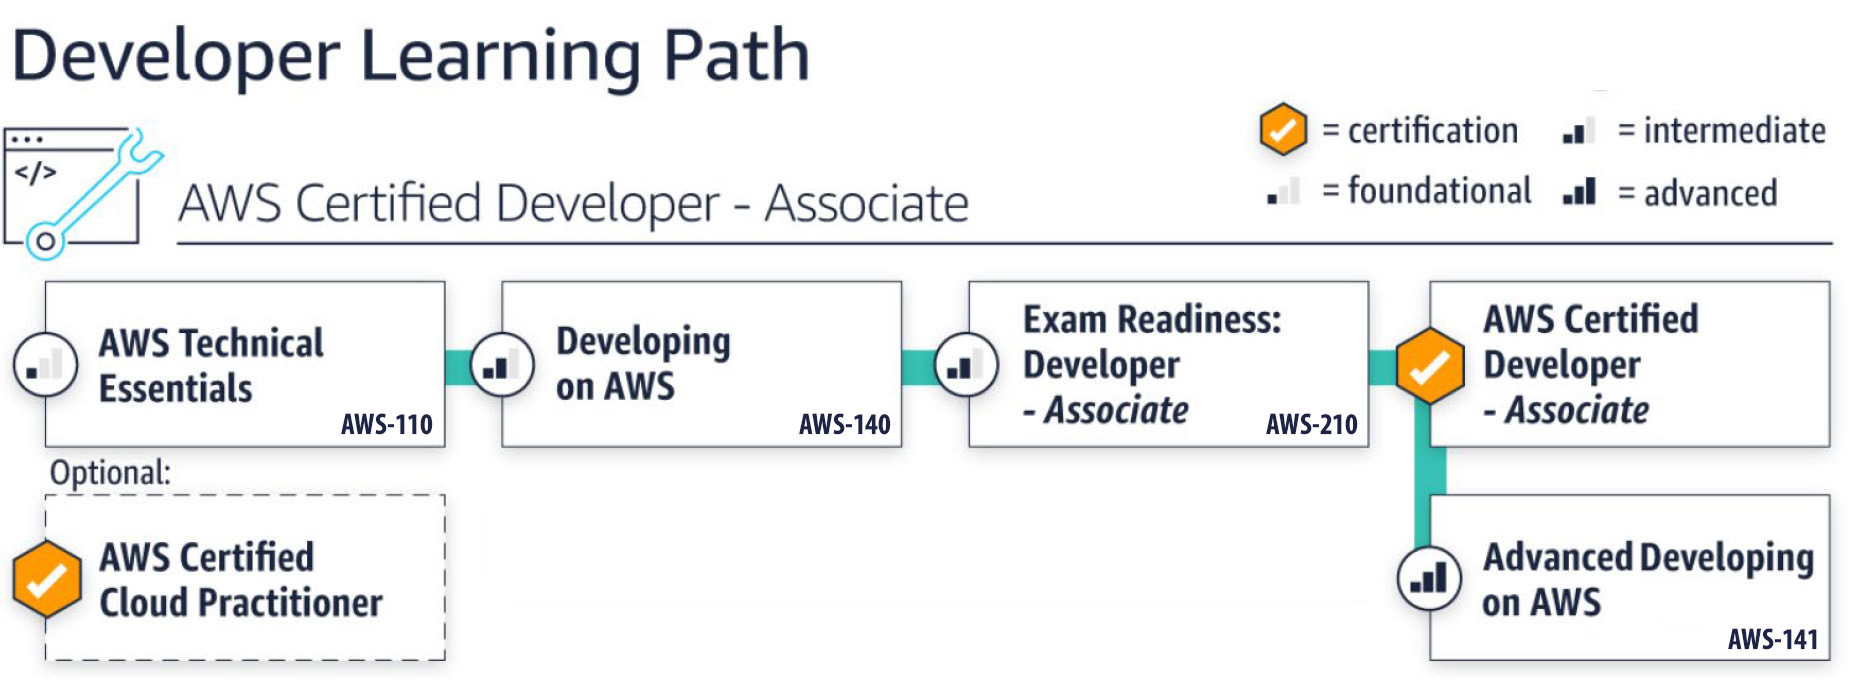 AWS Developer Learning Path